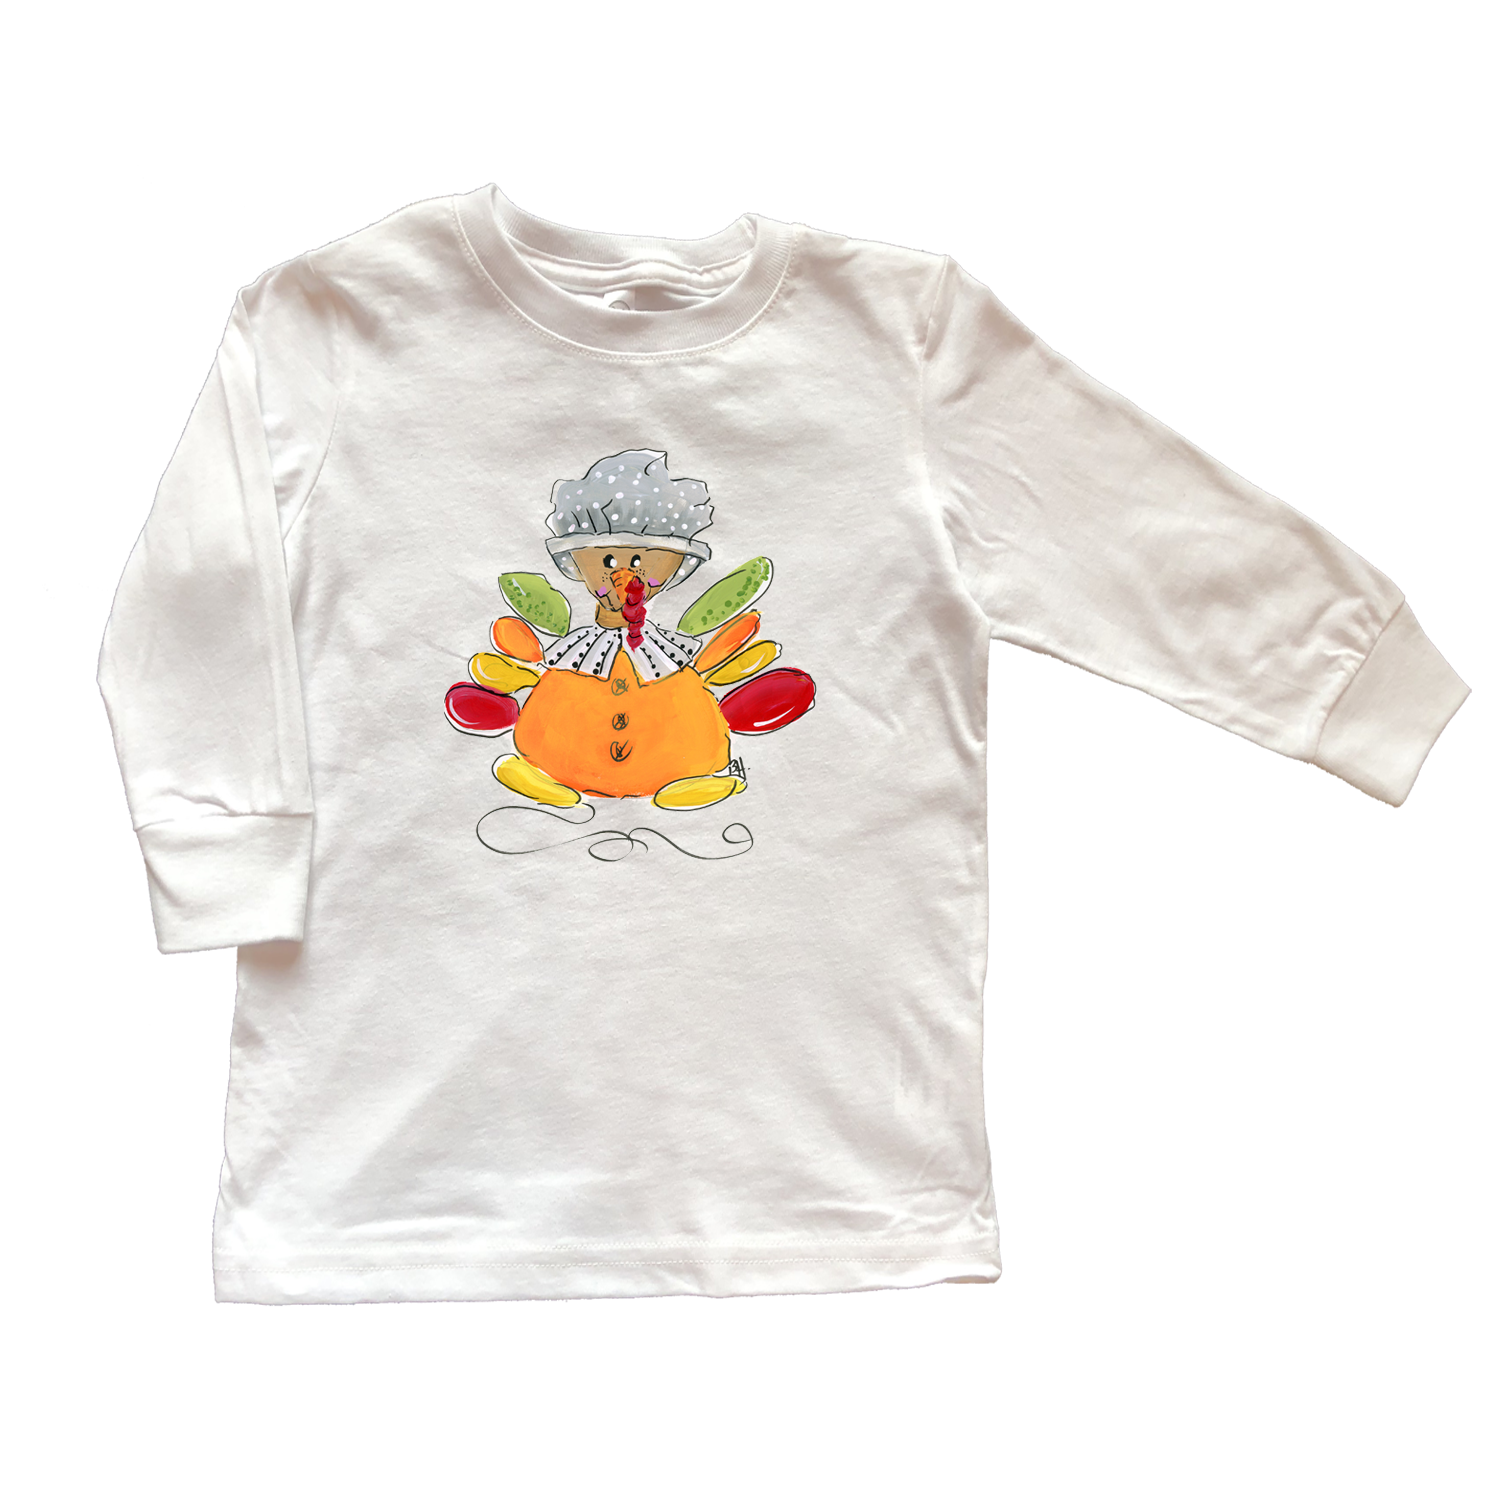 Cotton Tee Shirt Long Sleeve Fall TS975